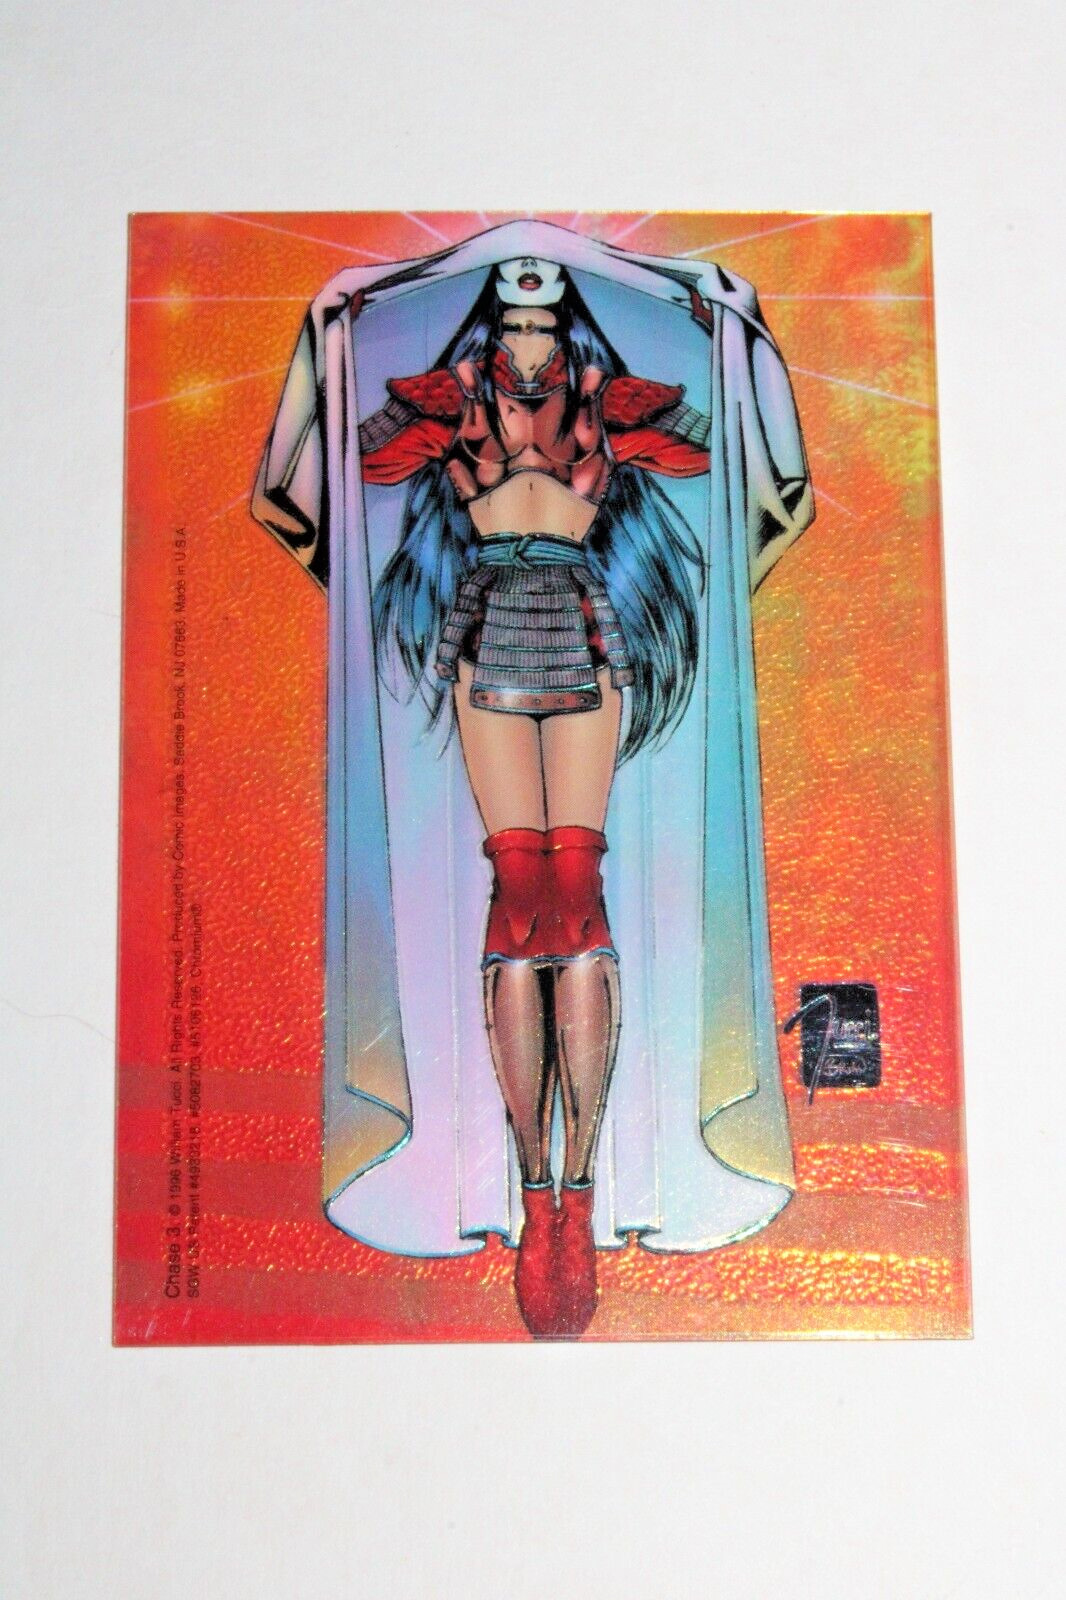 1996 SHI CHROMIUM VISIONS GOLDEN EMPIRE CLEAR CHROMIUM BONUS CHASE #3 CARD TUCCI